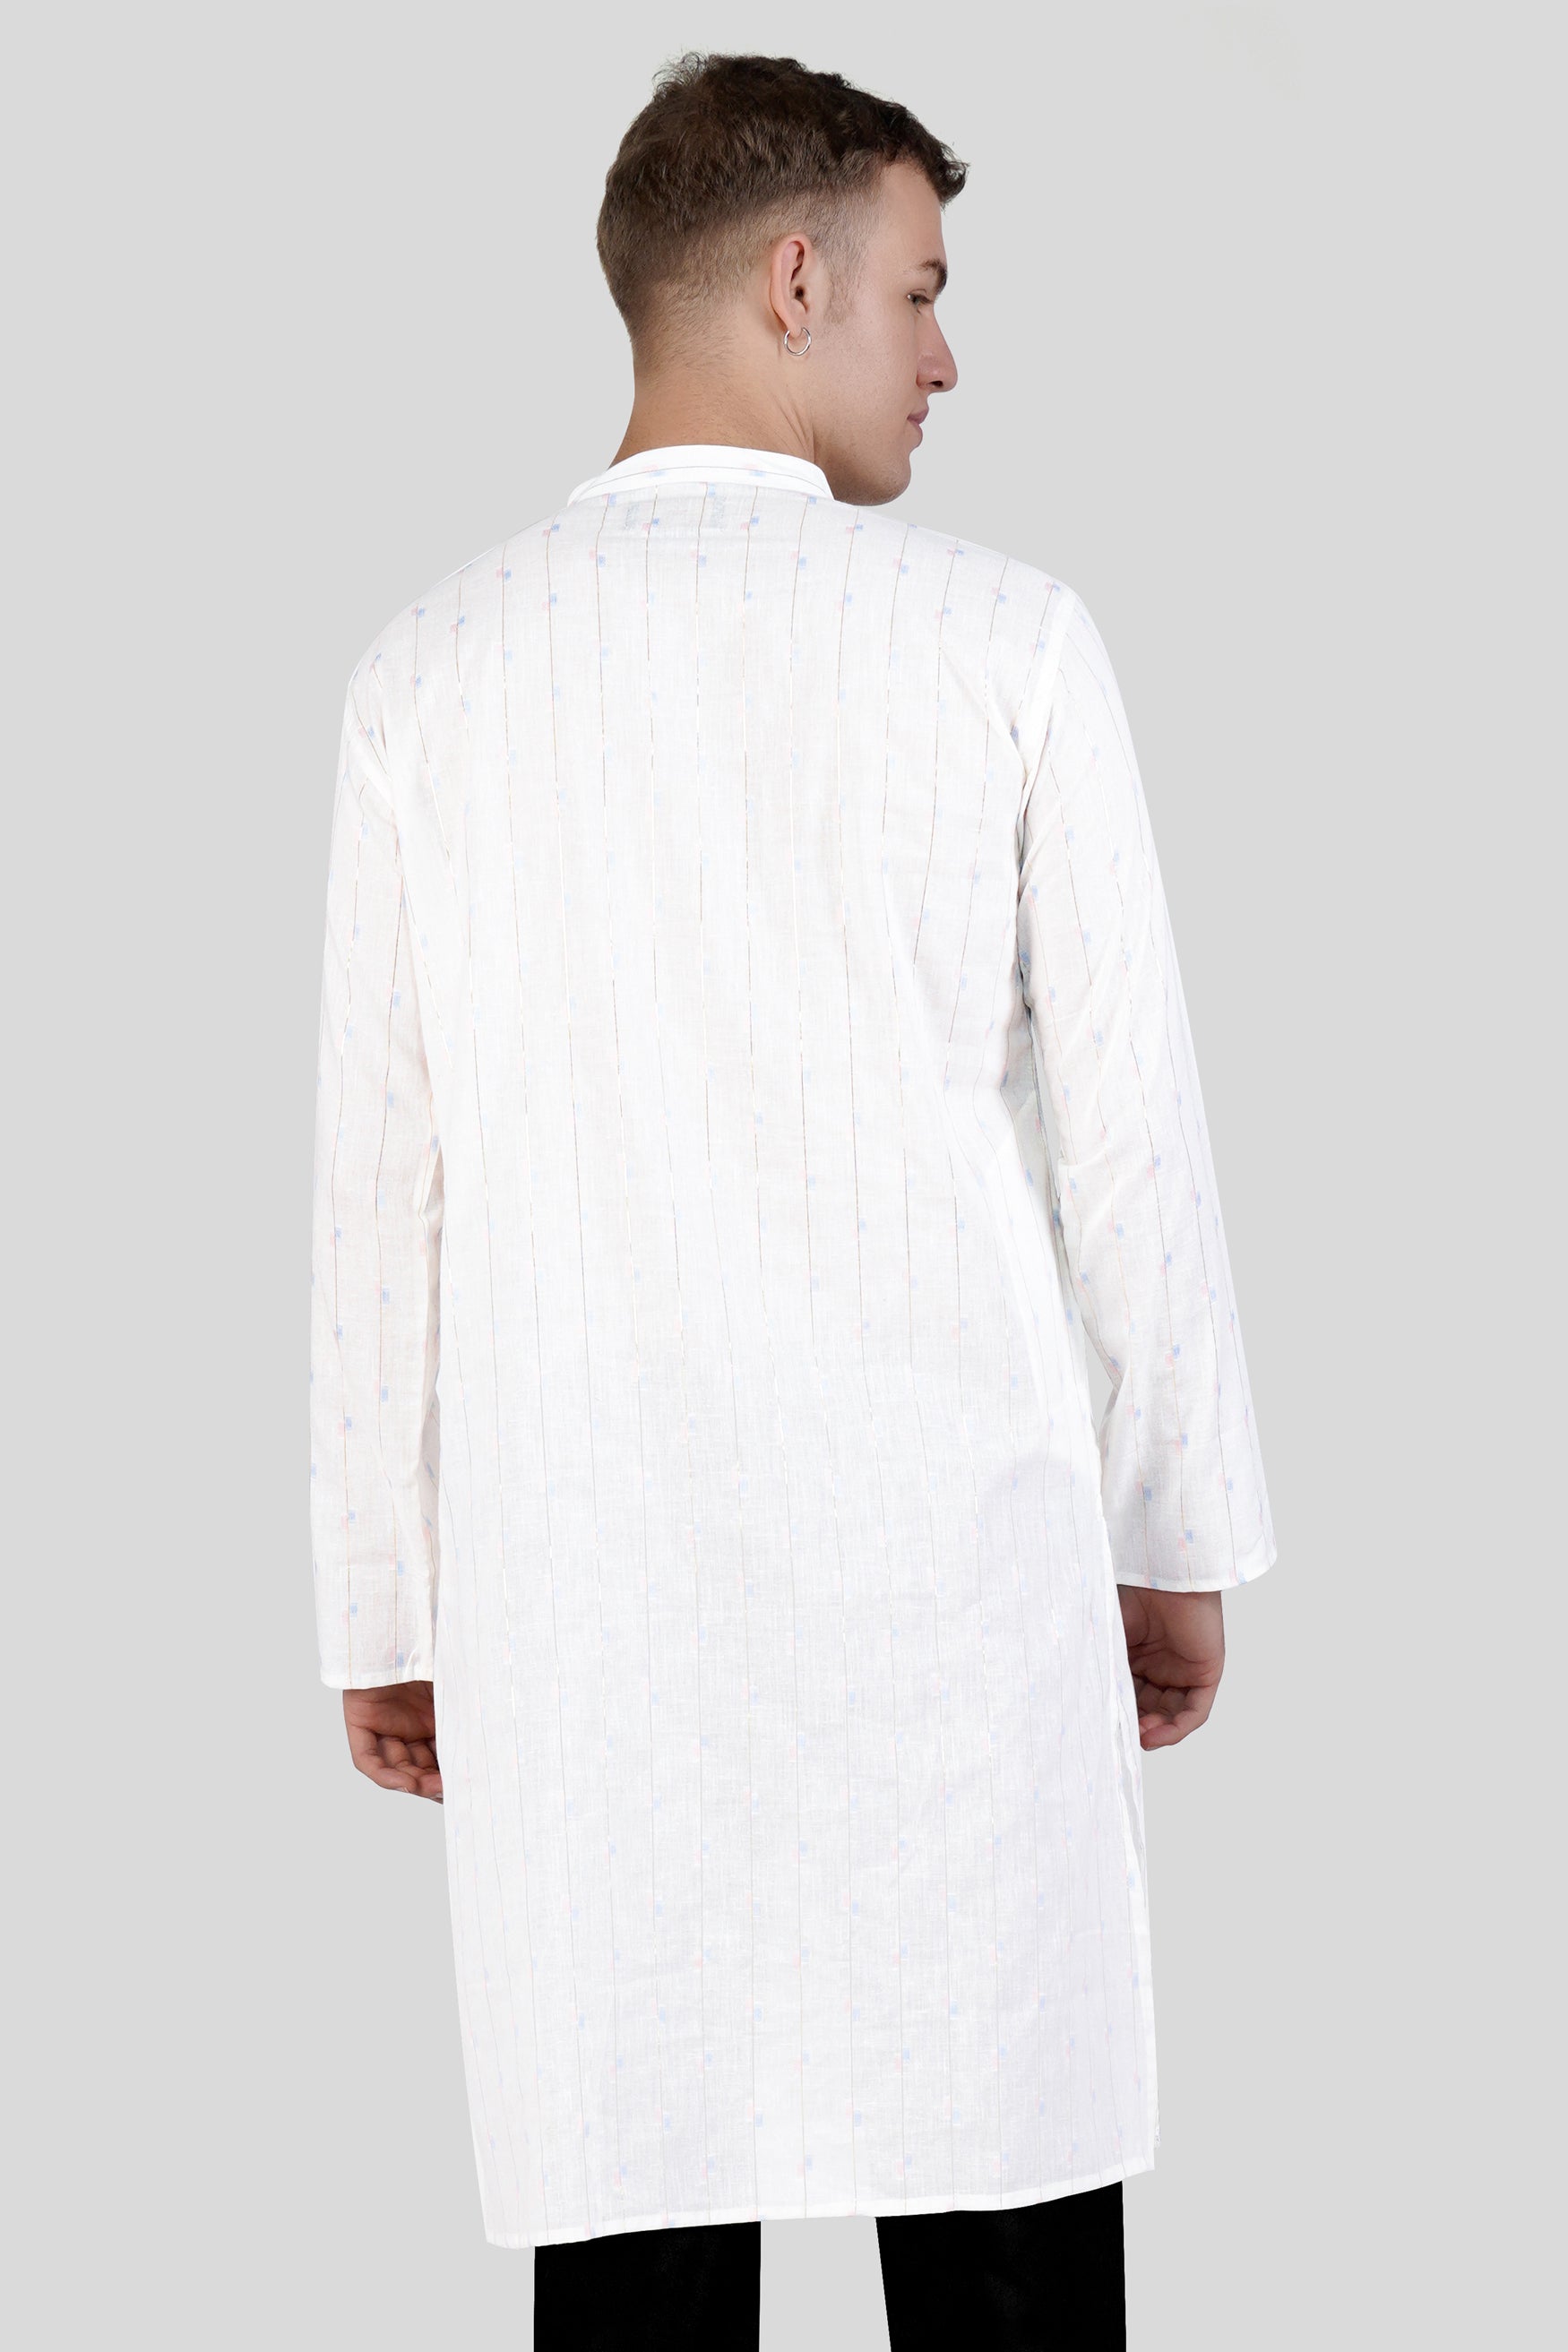 Off White Striped Jacquard Textured Premium Giza Cotton Kurta